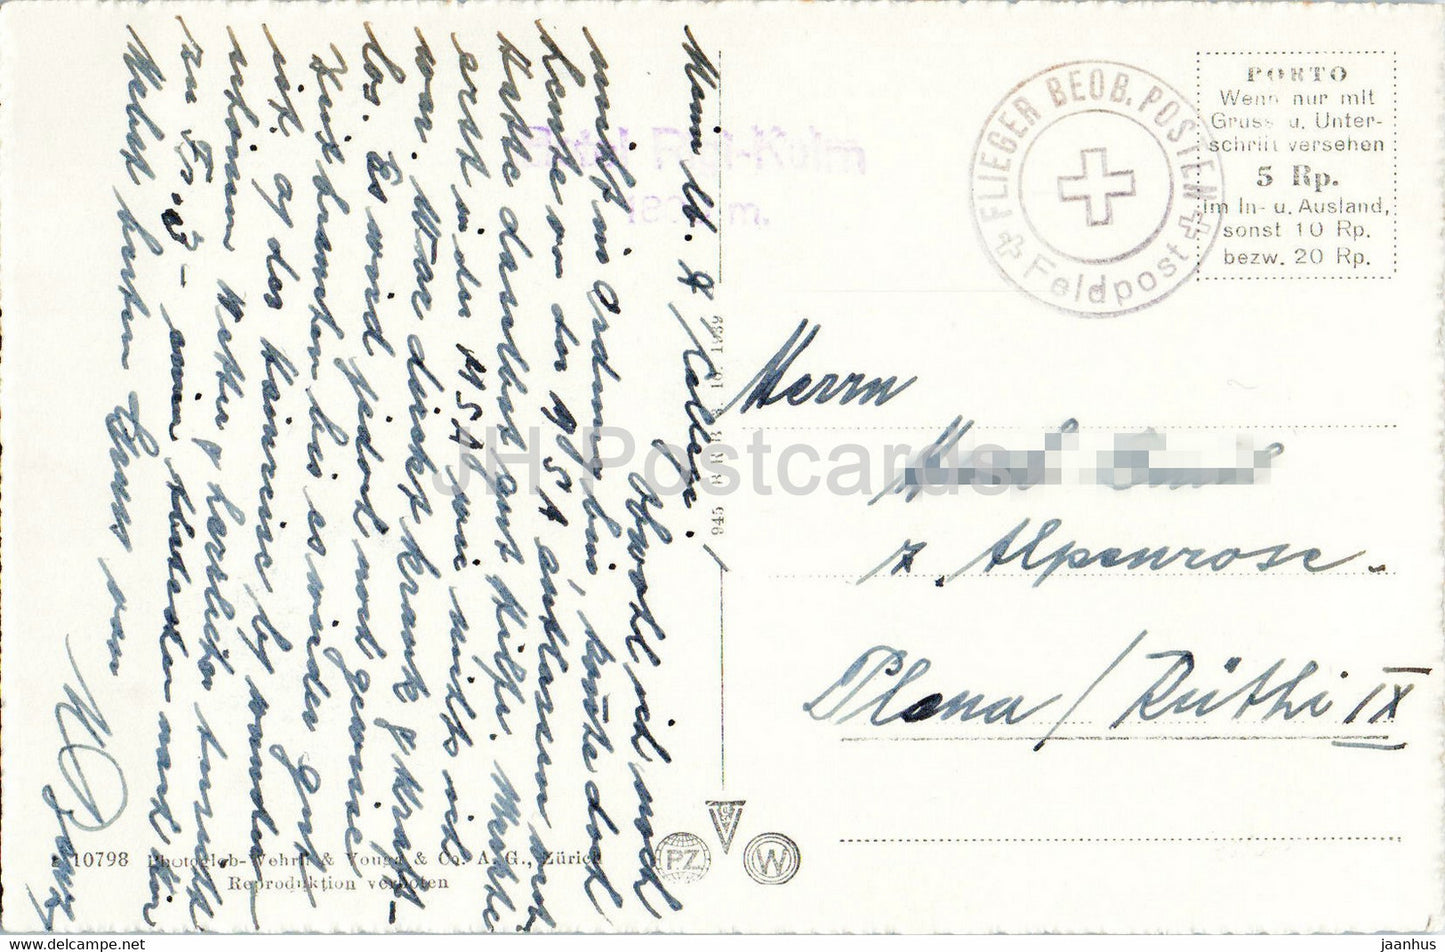 Rigi Staffel und Kulm mit Pilatus - Zugersee - train - Feldpost - courrier militaire - carte postale ancienne - Suisse - utilisé